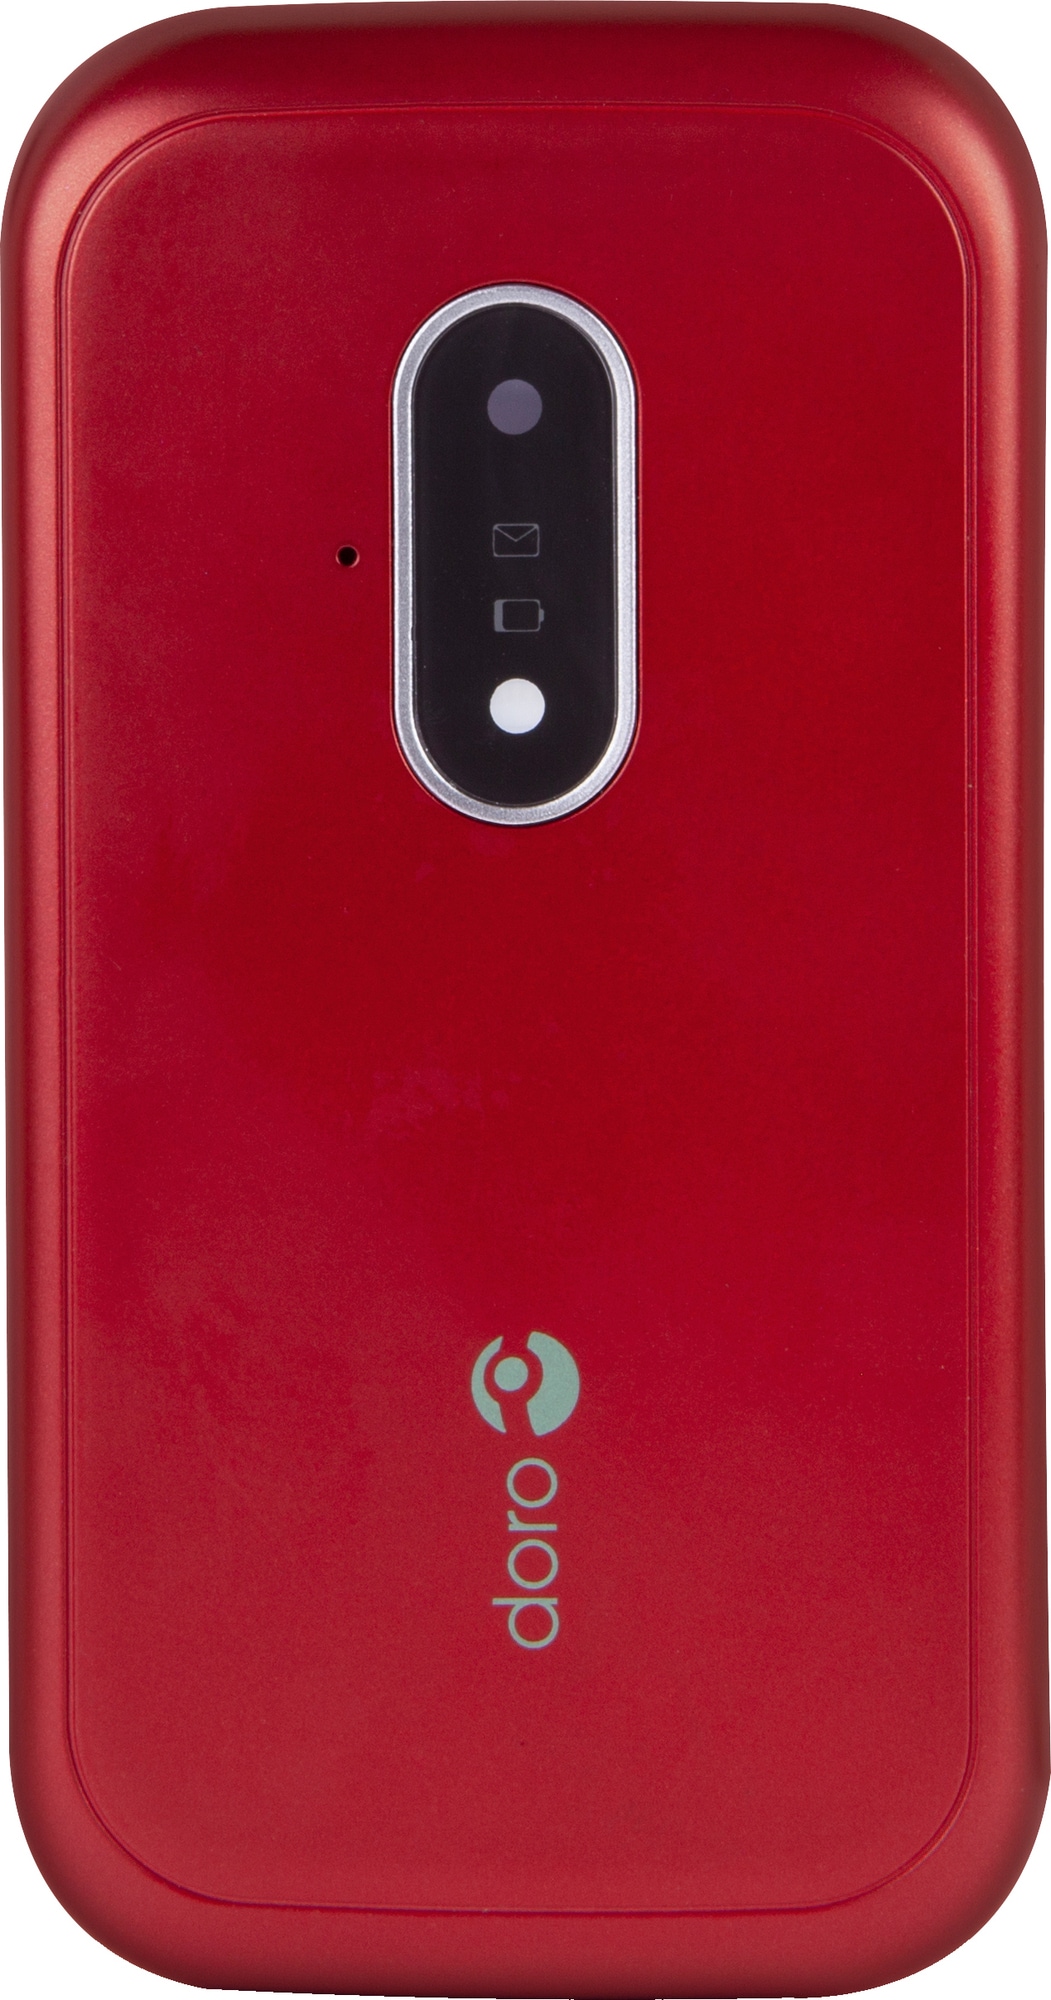 Doro 7031 mobiltelefon (rød/hvid) | Elgiganten